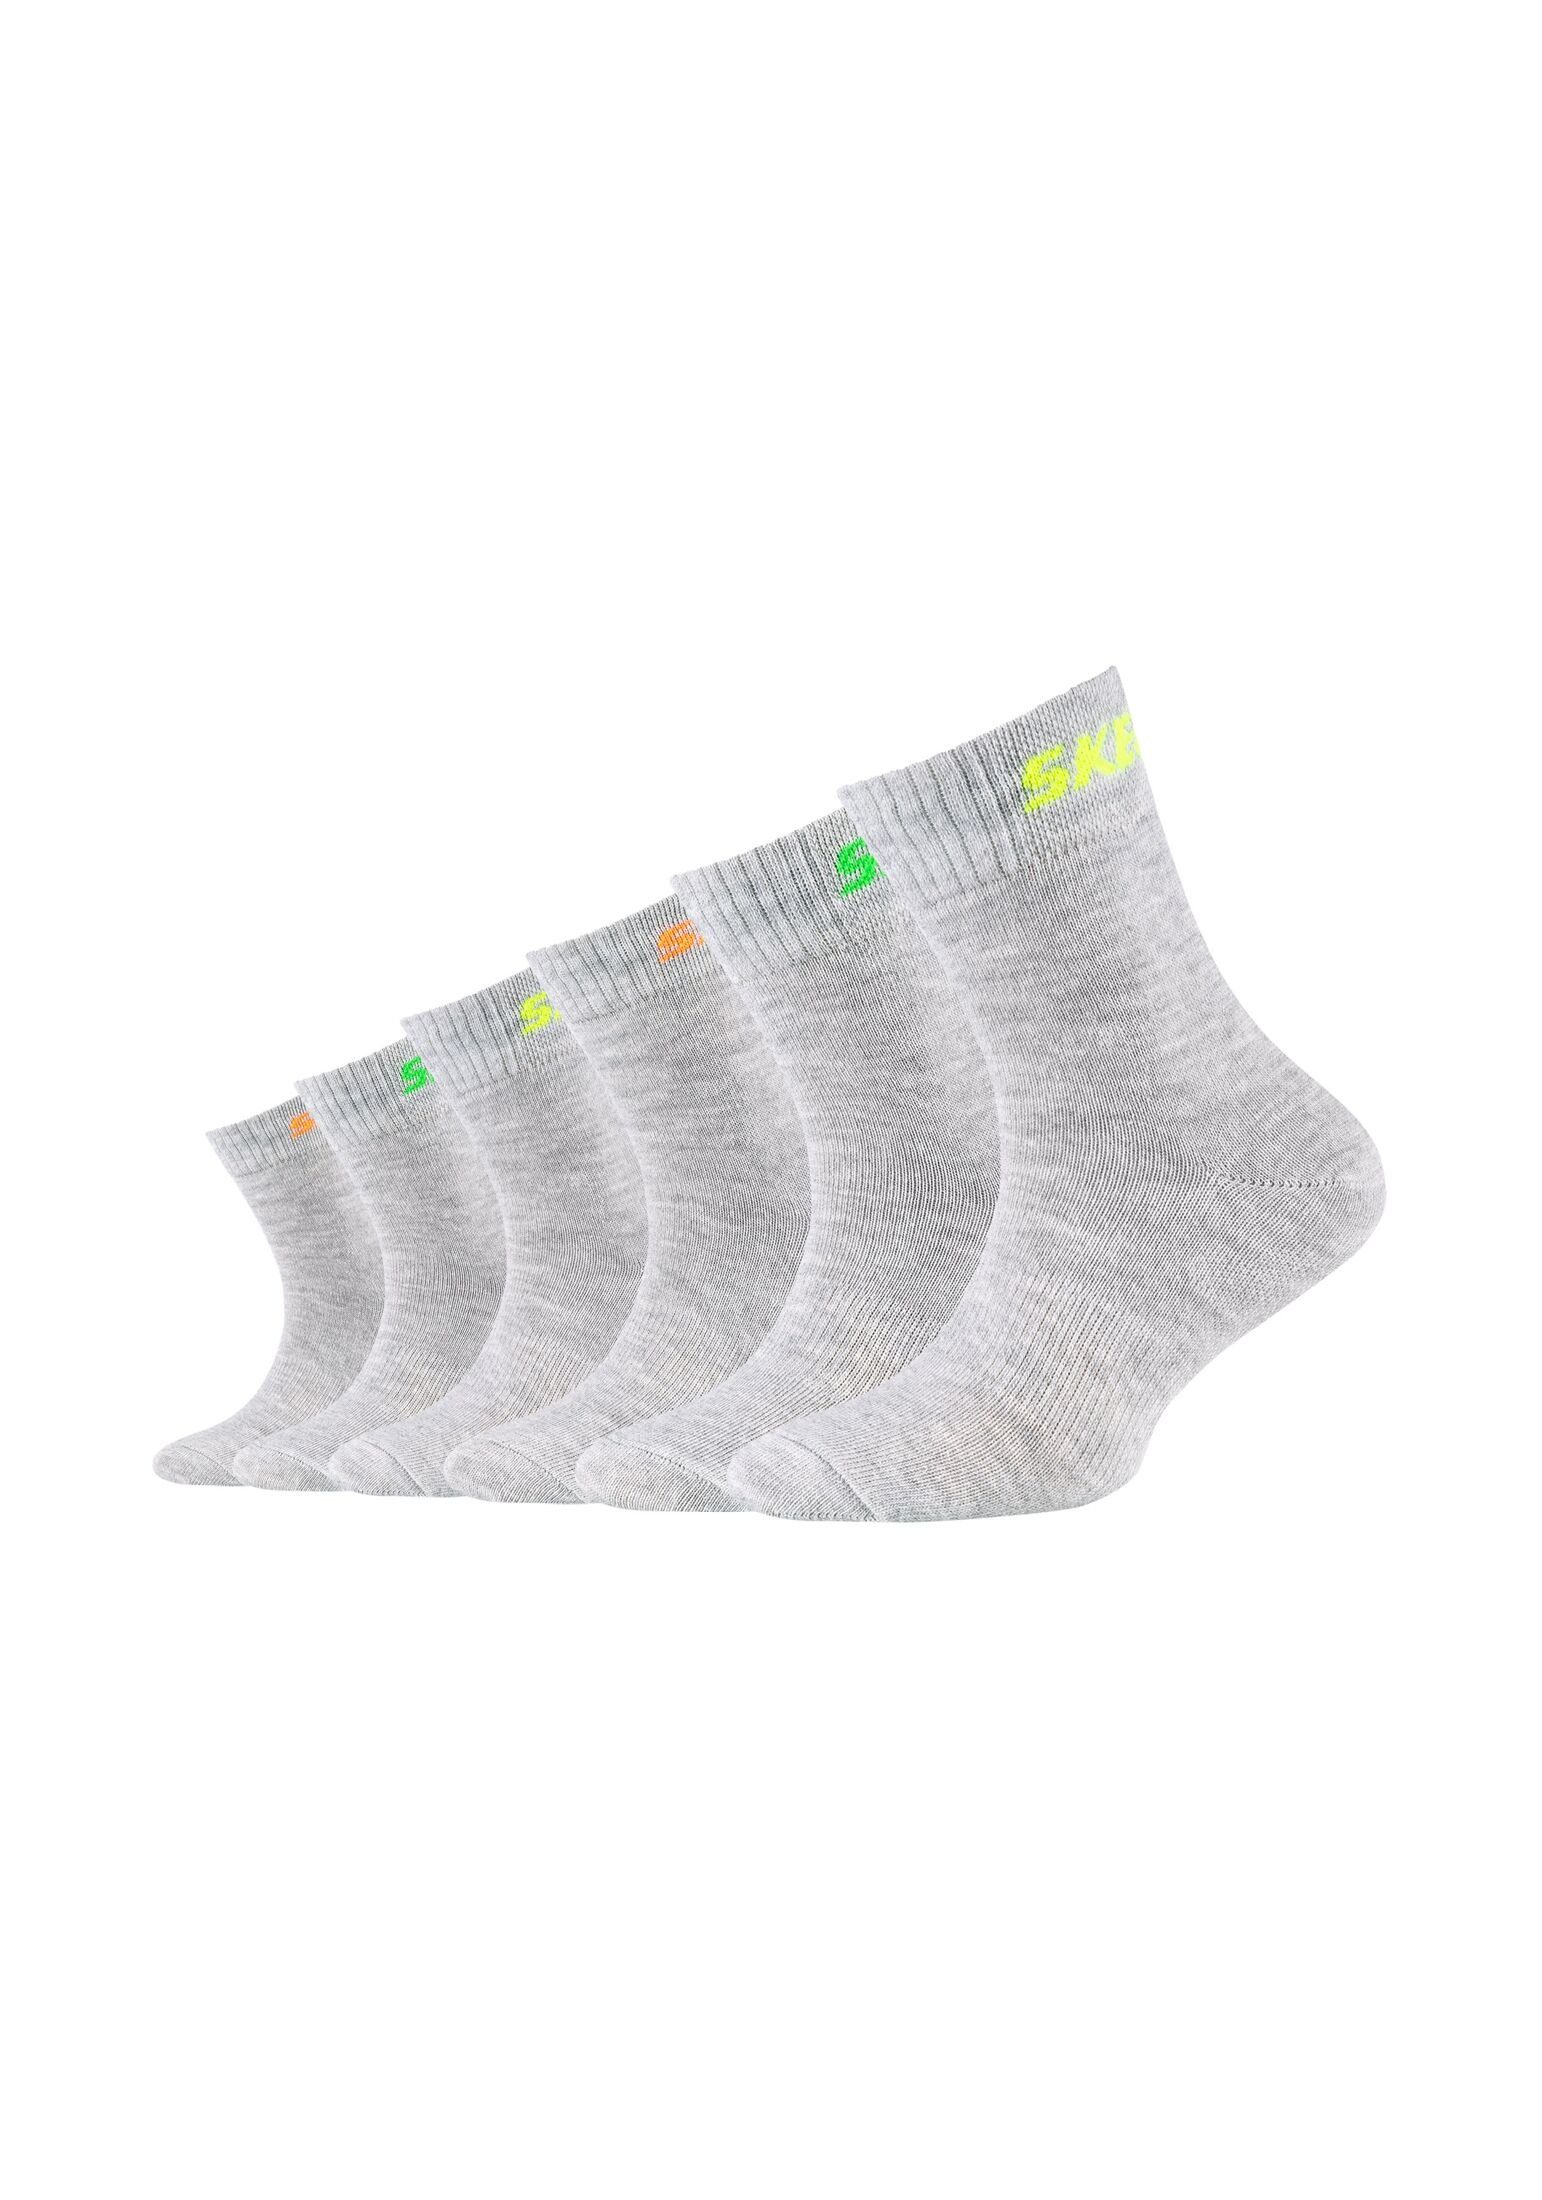 Skechers Socken Socken 6er Pack, Mit Netzbelüftung feuchtigkeitsregulierender